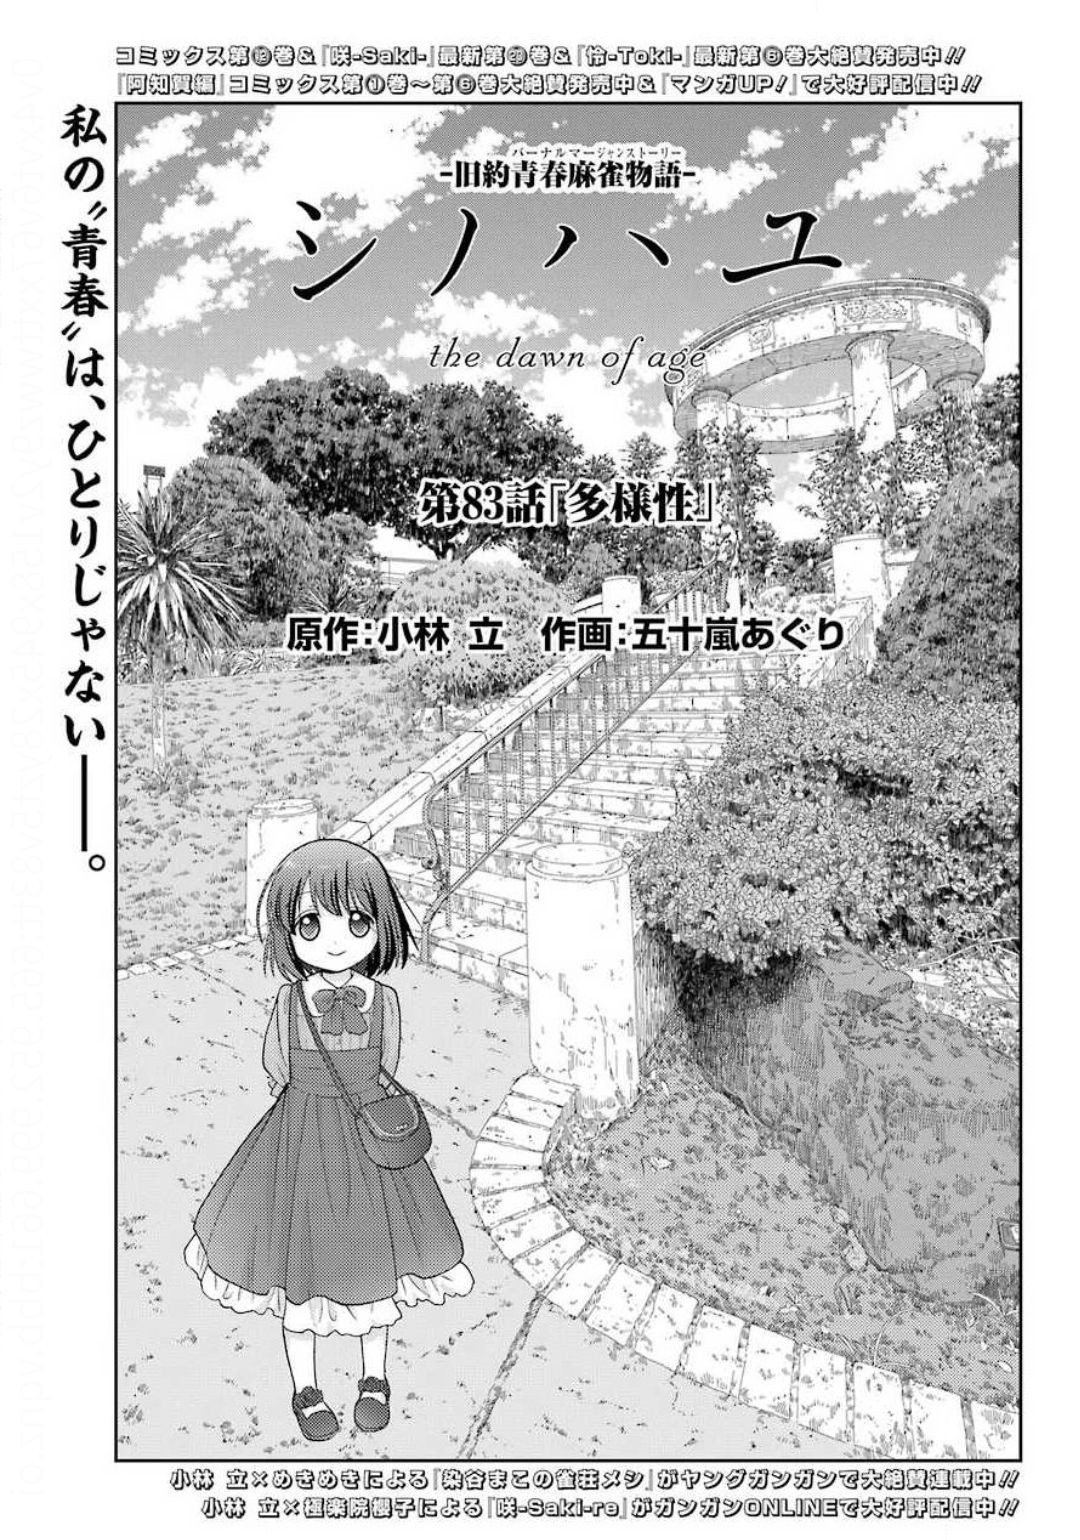 Shinohayu - The Dawn of Age Manga - Chapter 083 - Page 1